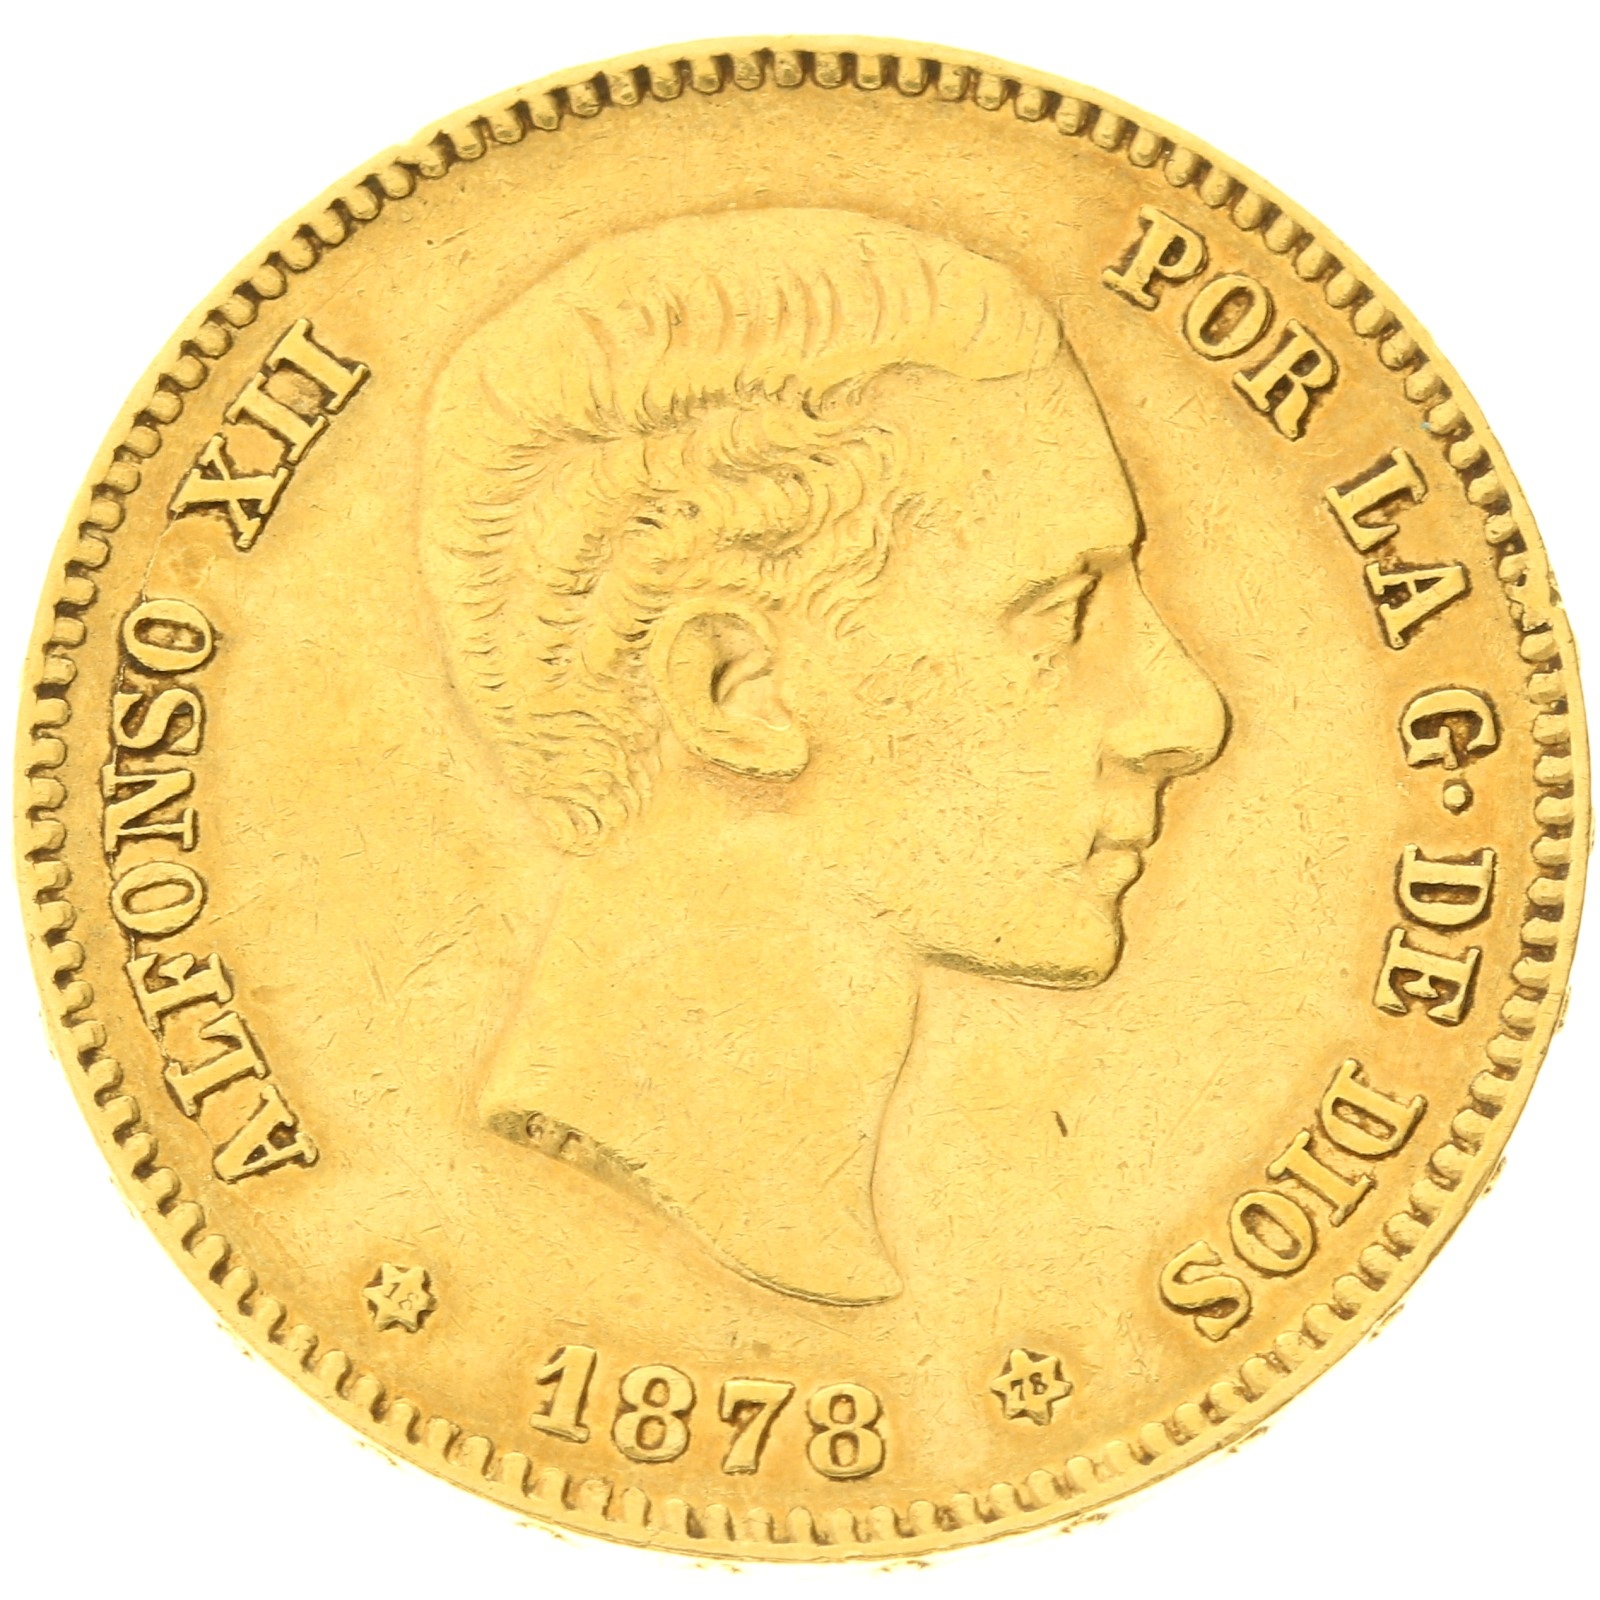 Spain - 25 pesetas - 1878 - Alfonso XII 